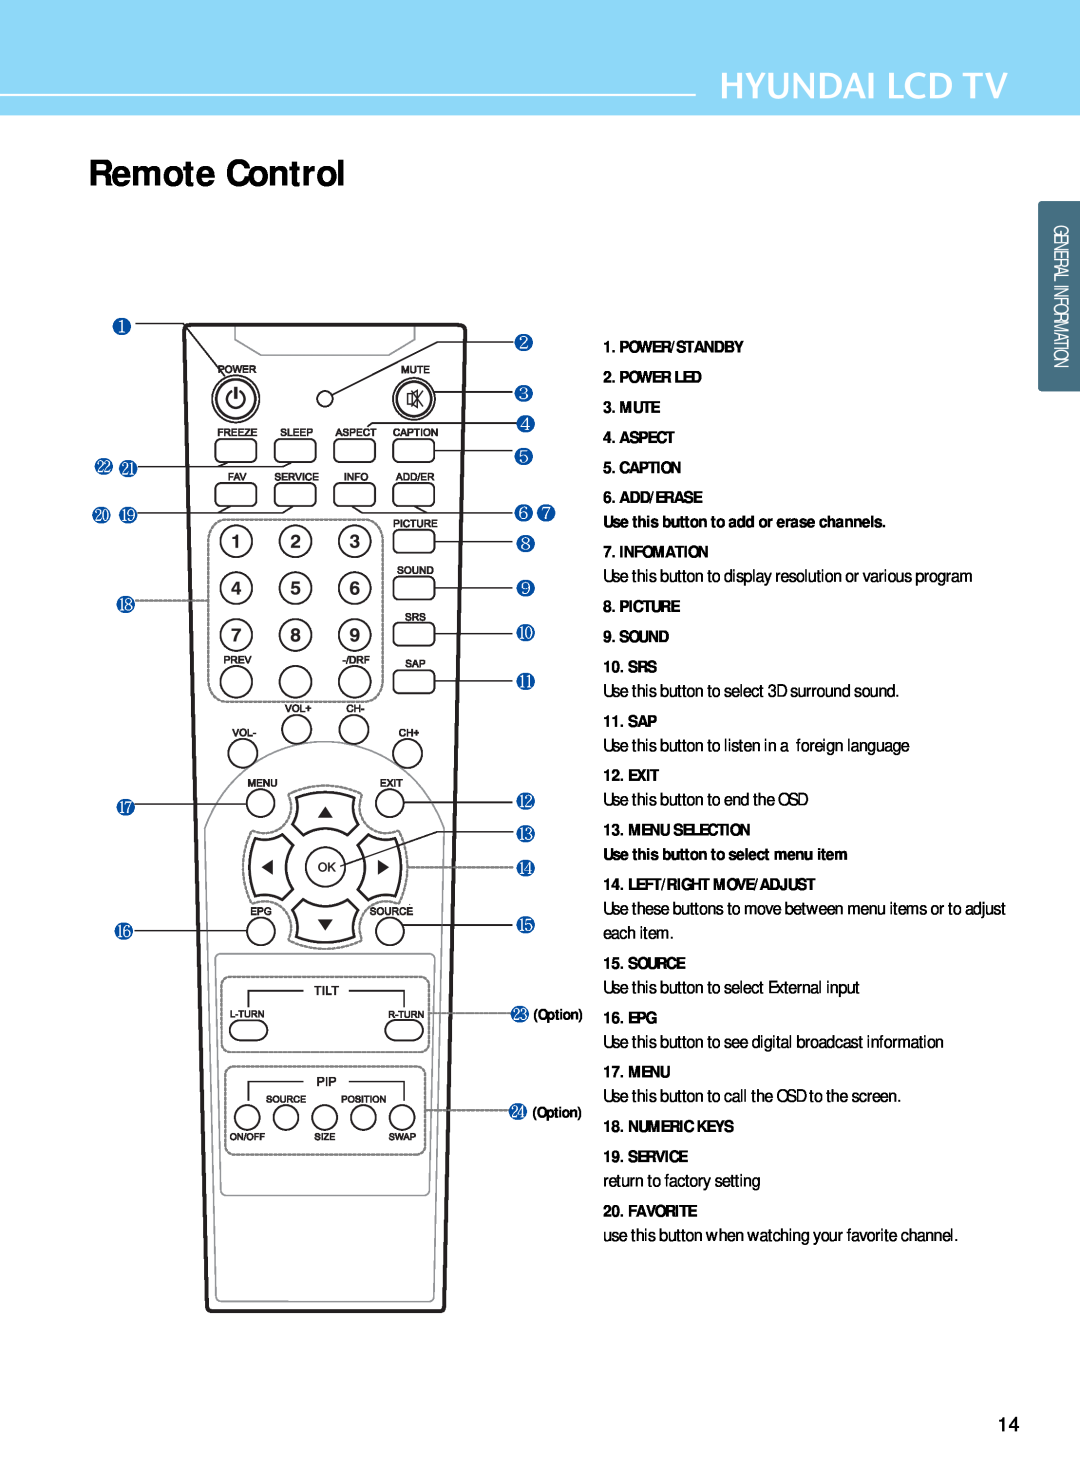 Hyundai E321D, E261D, E371D manual Remote Control, Hyundai Lcd Tv 